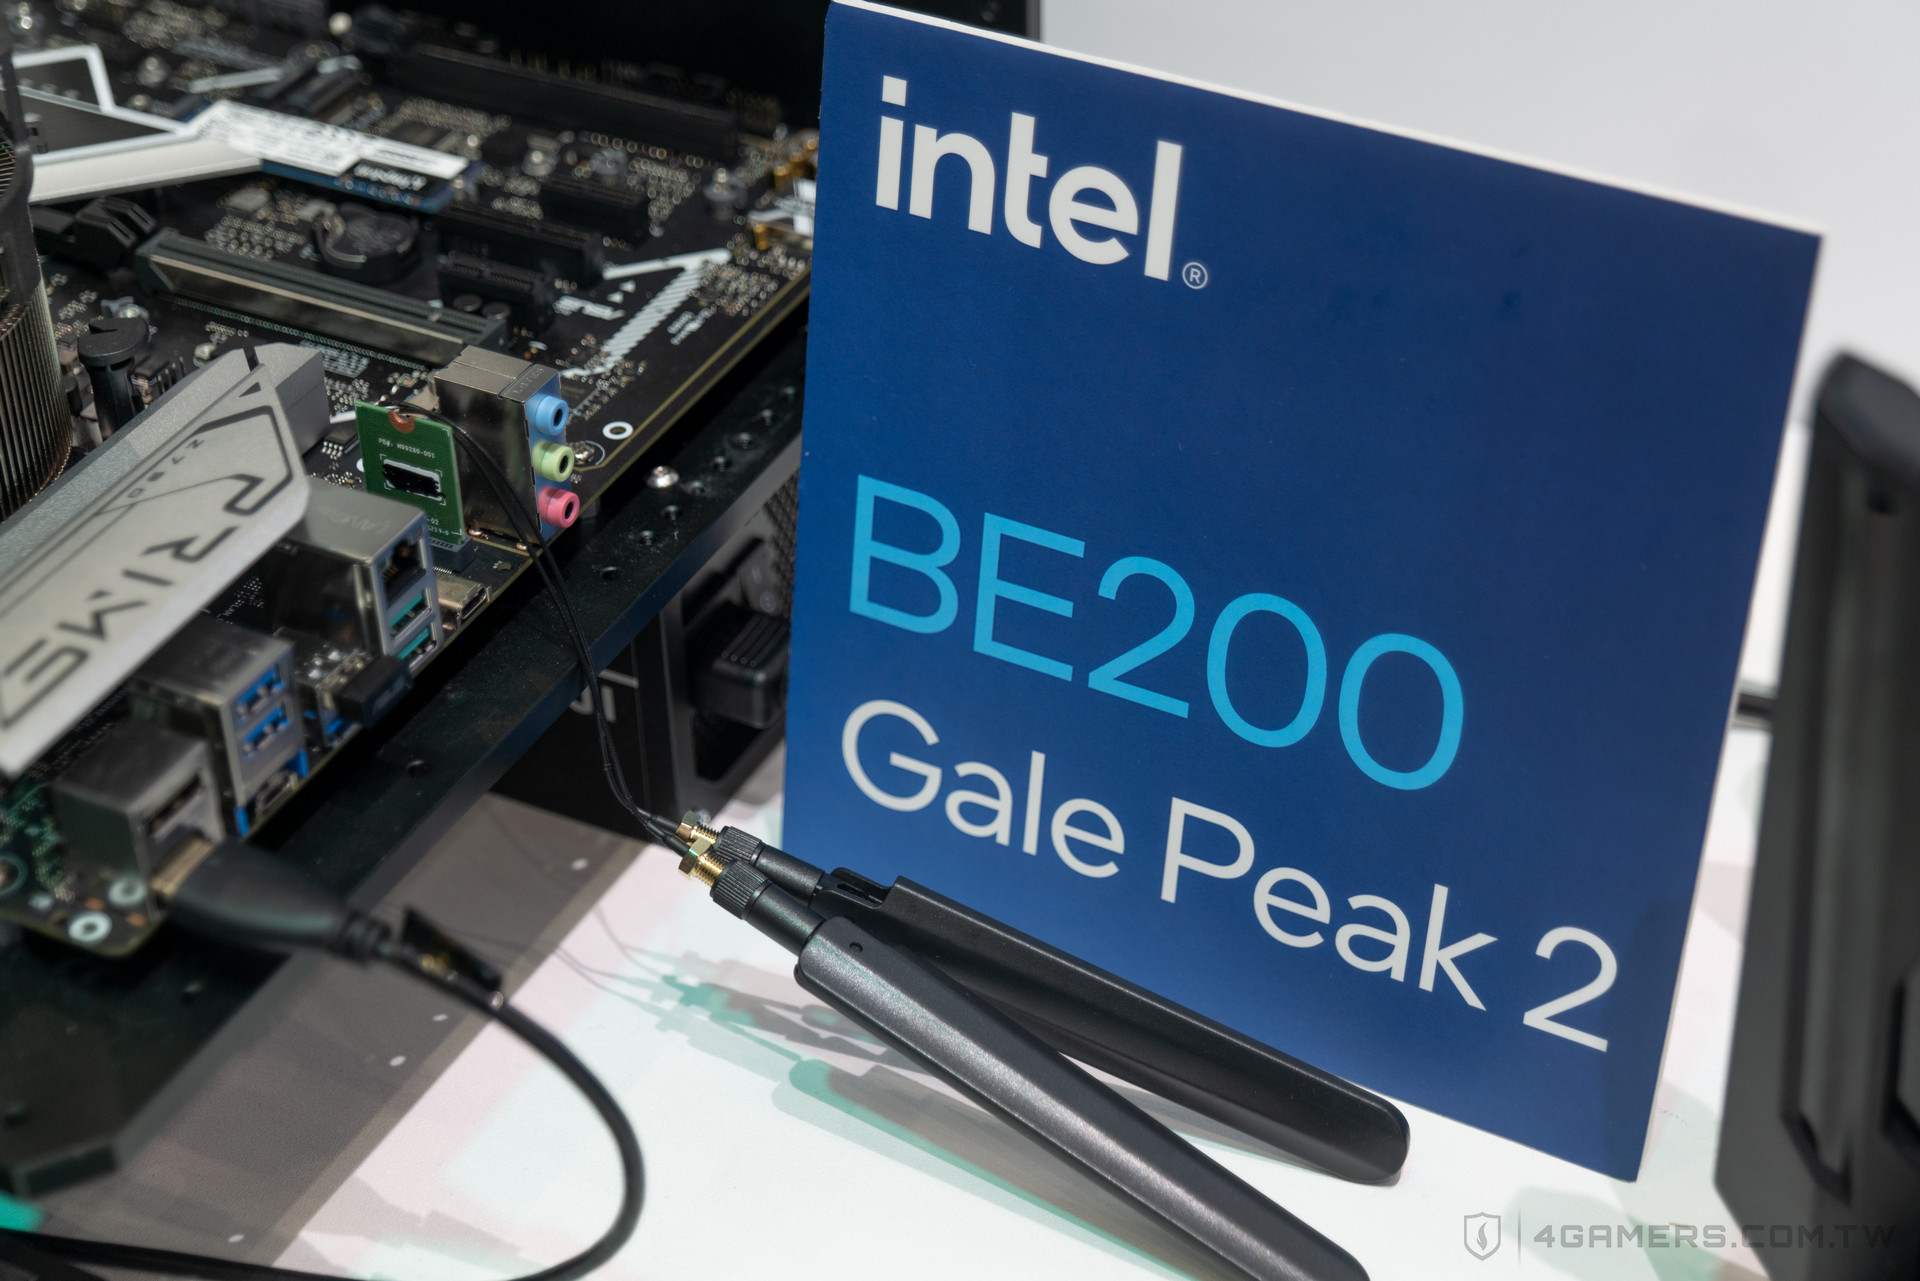 Intel BE200 Gale Peak 2 Wi-Fi 7 網卡